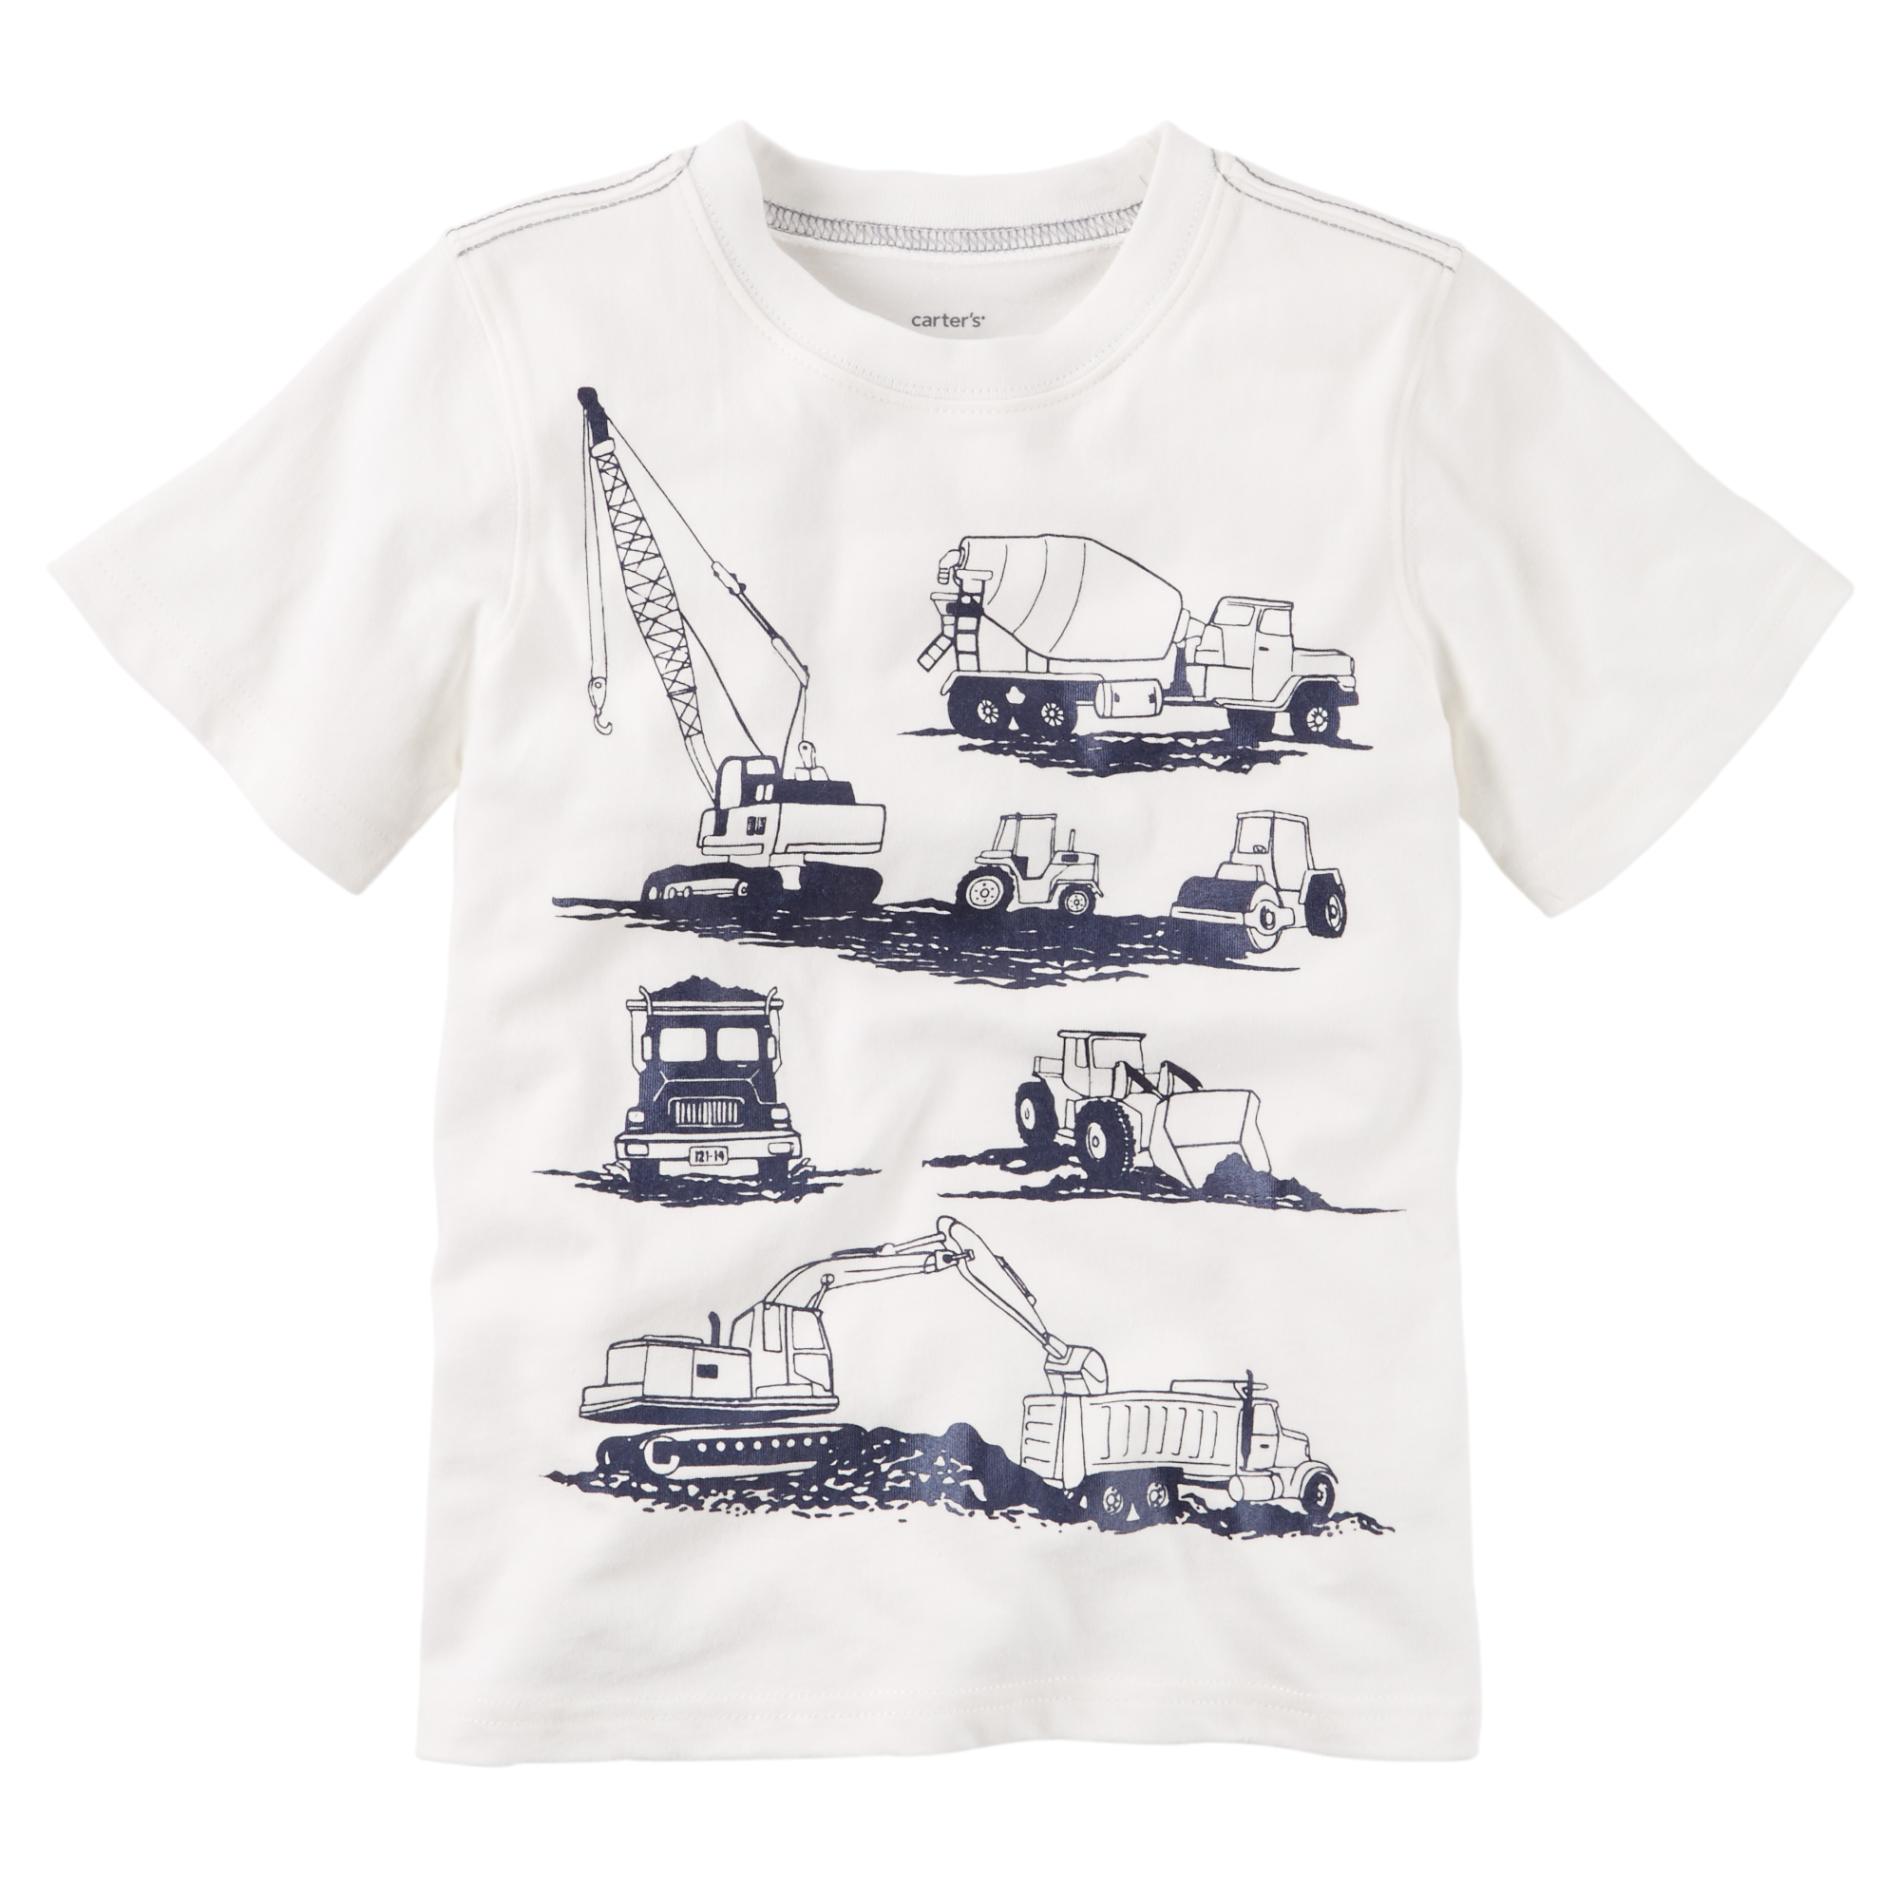 Carter's Toddler Boy's Graphic T-Shirt - Construction Trucks